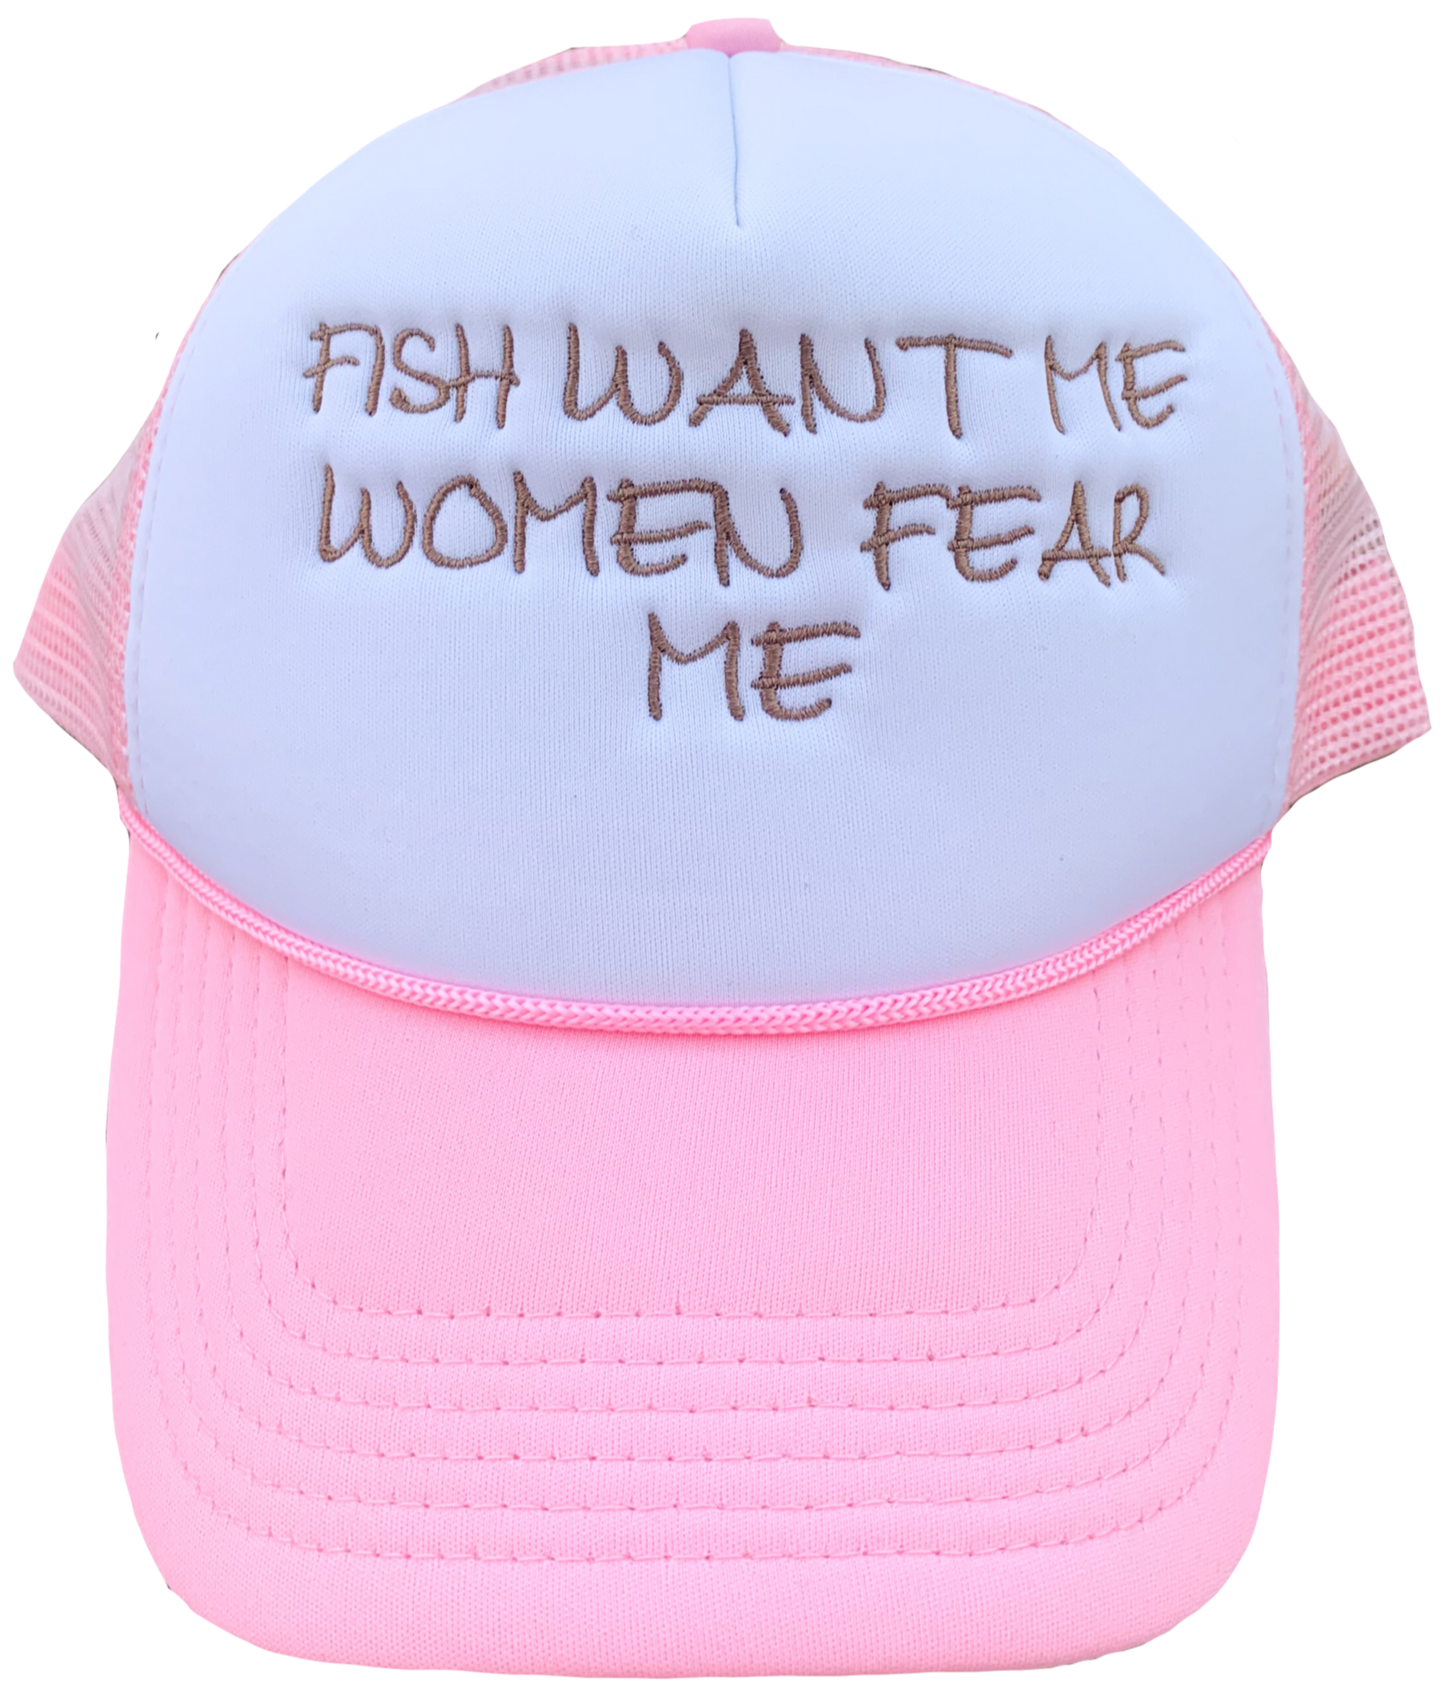 Women Want Me, Fish Fear Me -  Israel